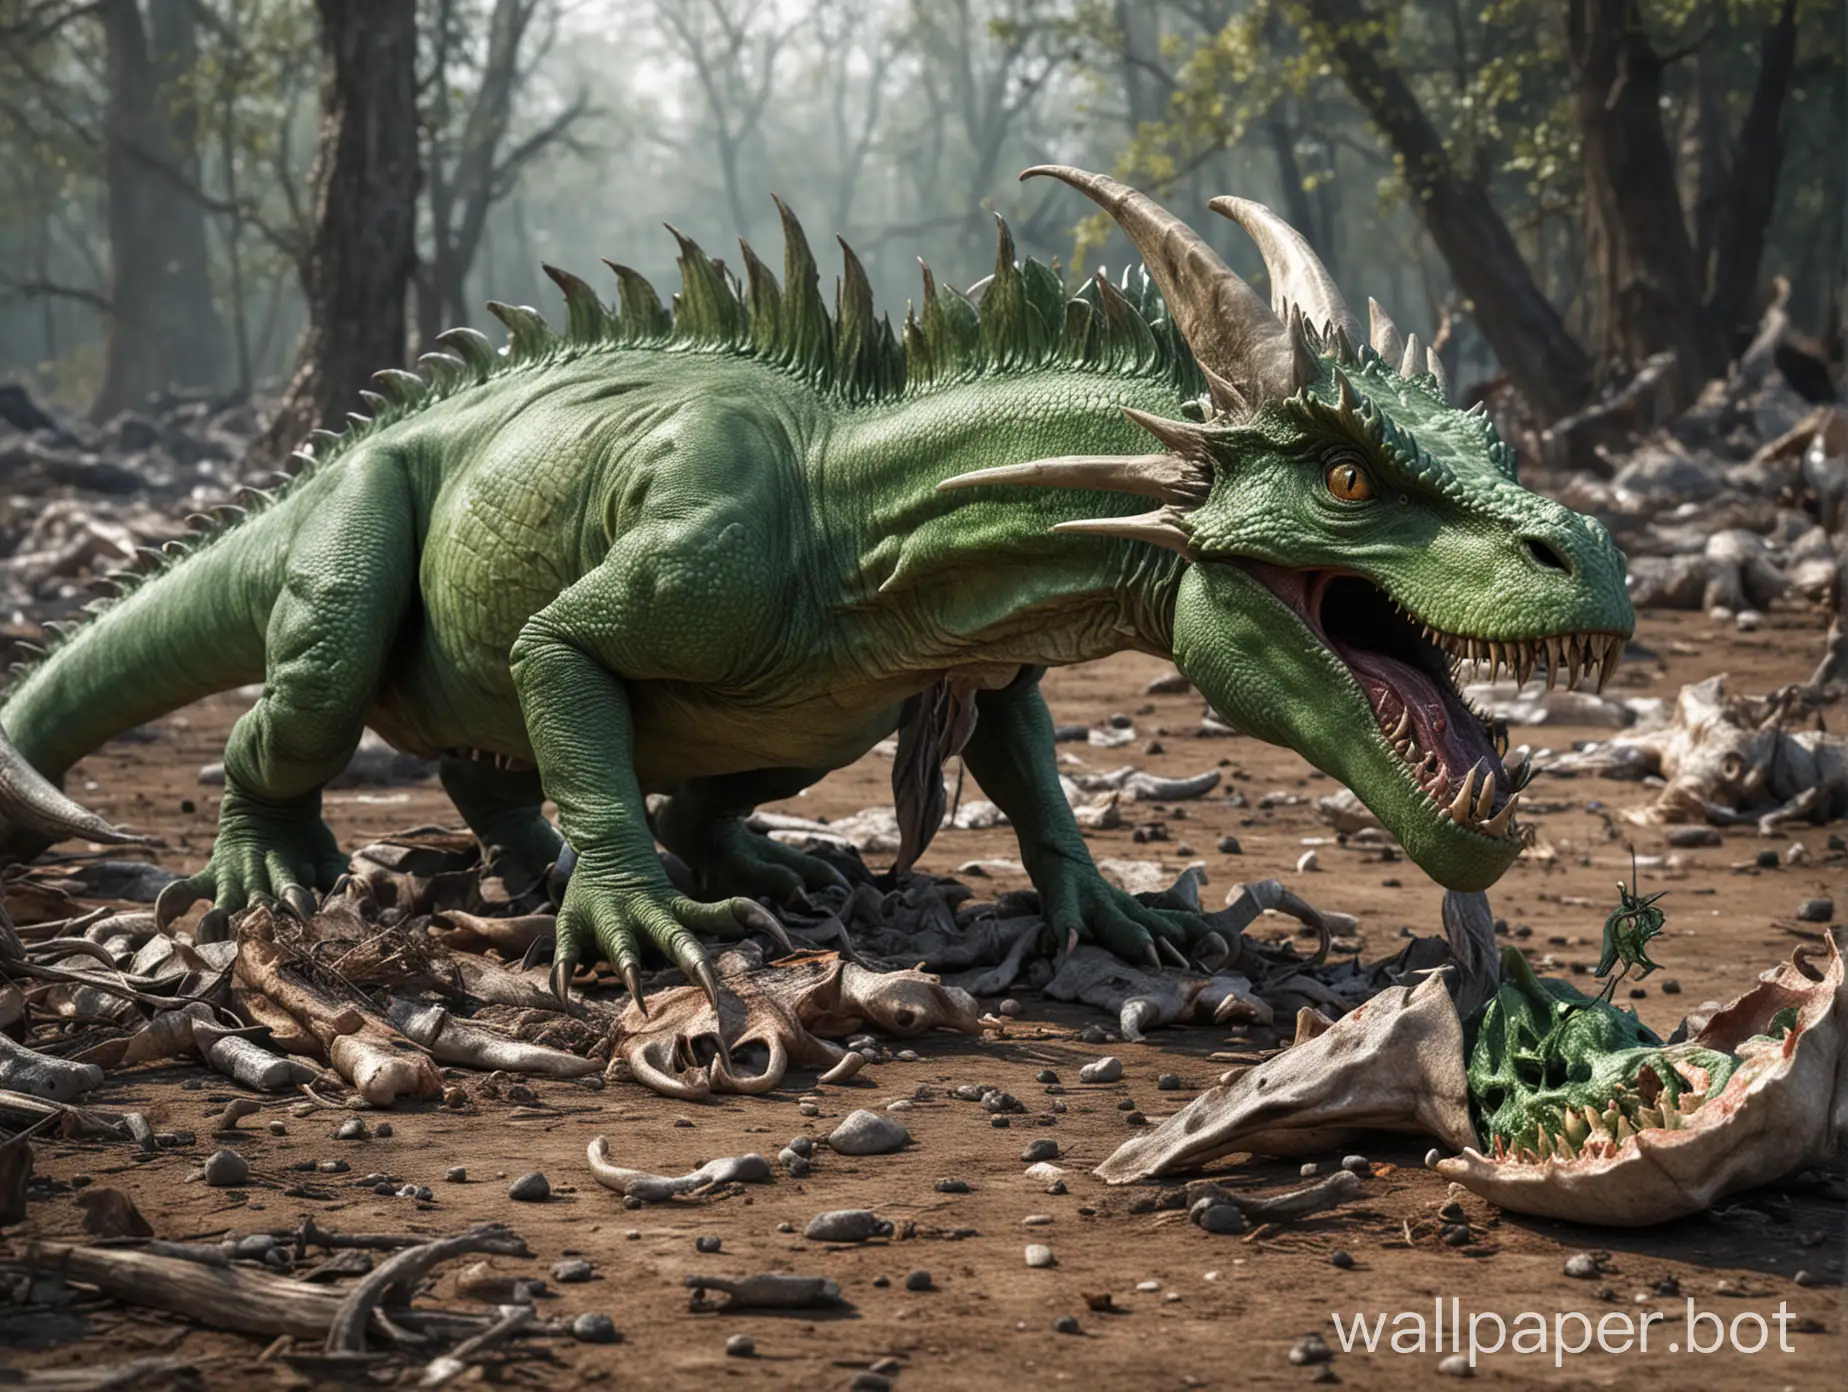 a green dragon eating a dinosaur carcass